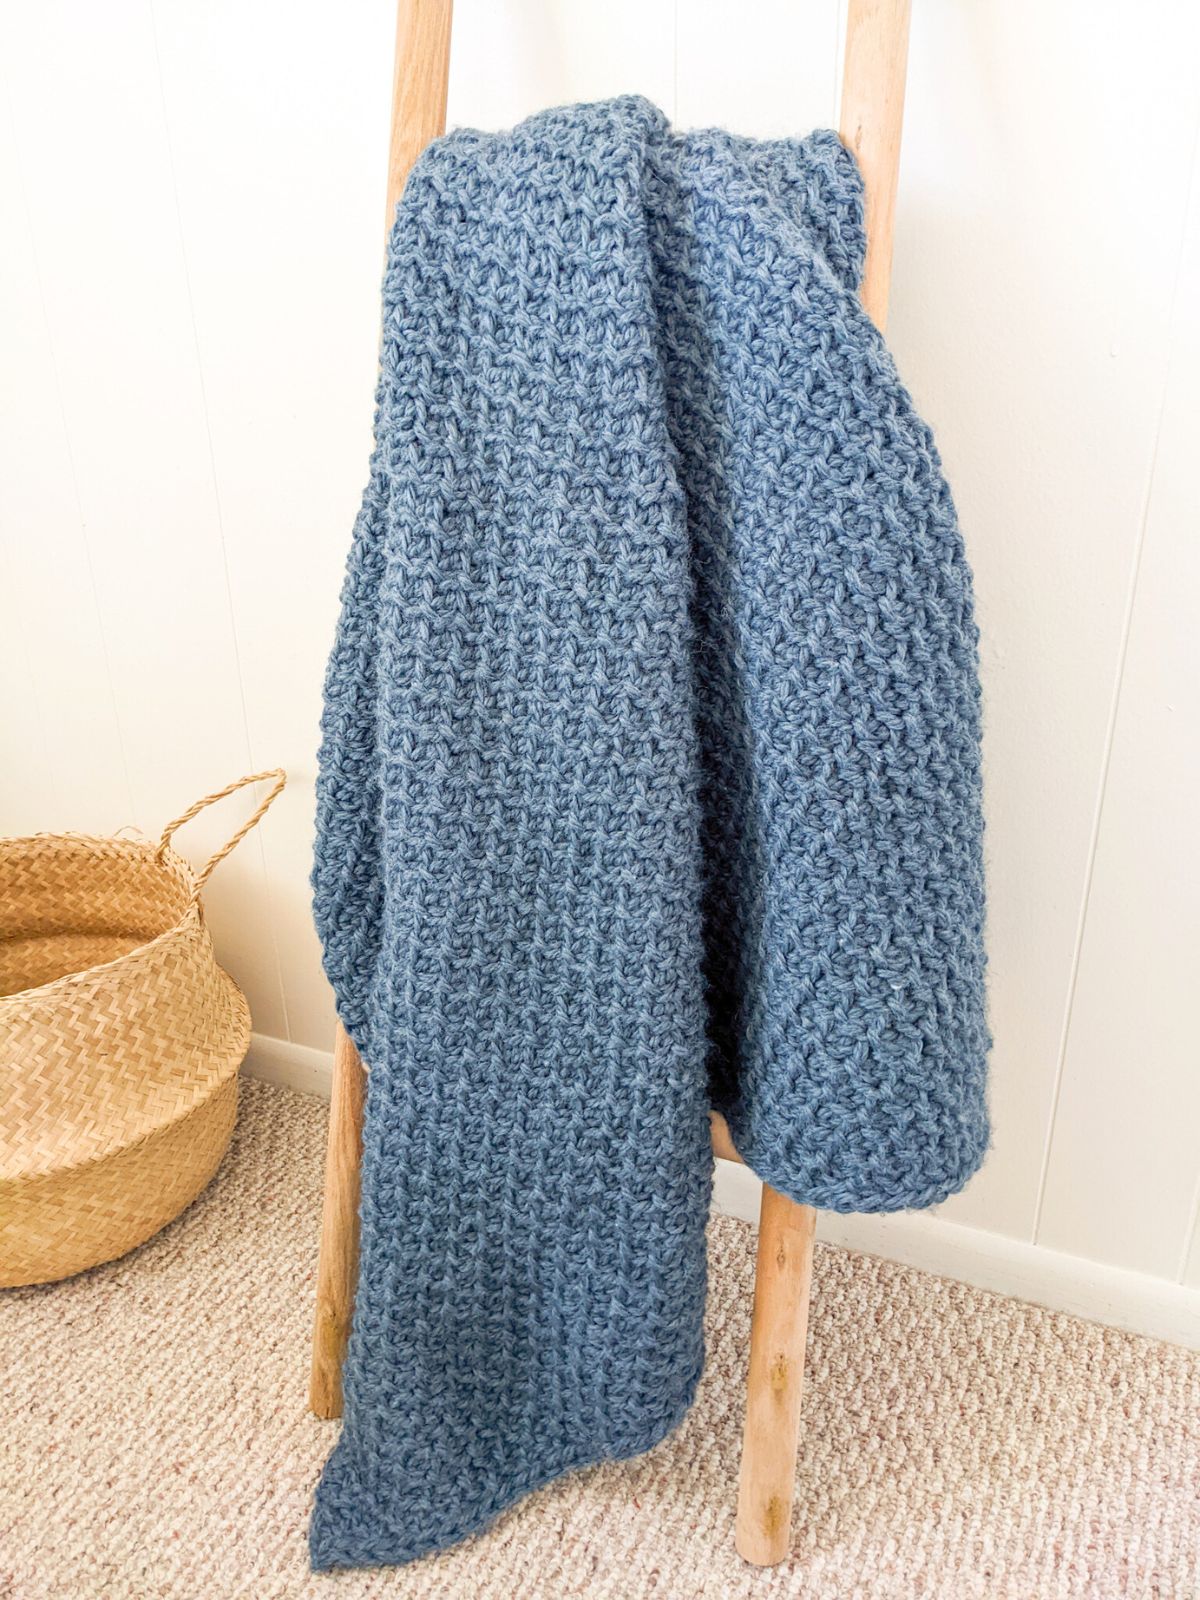 Tunisian crochet blanket pattern that uses Lion Brand Re-Spun Thick Quick Yarn